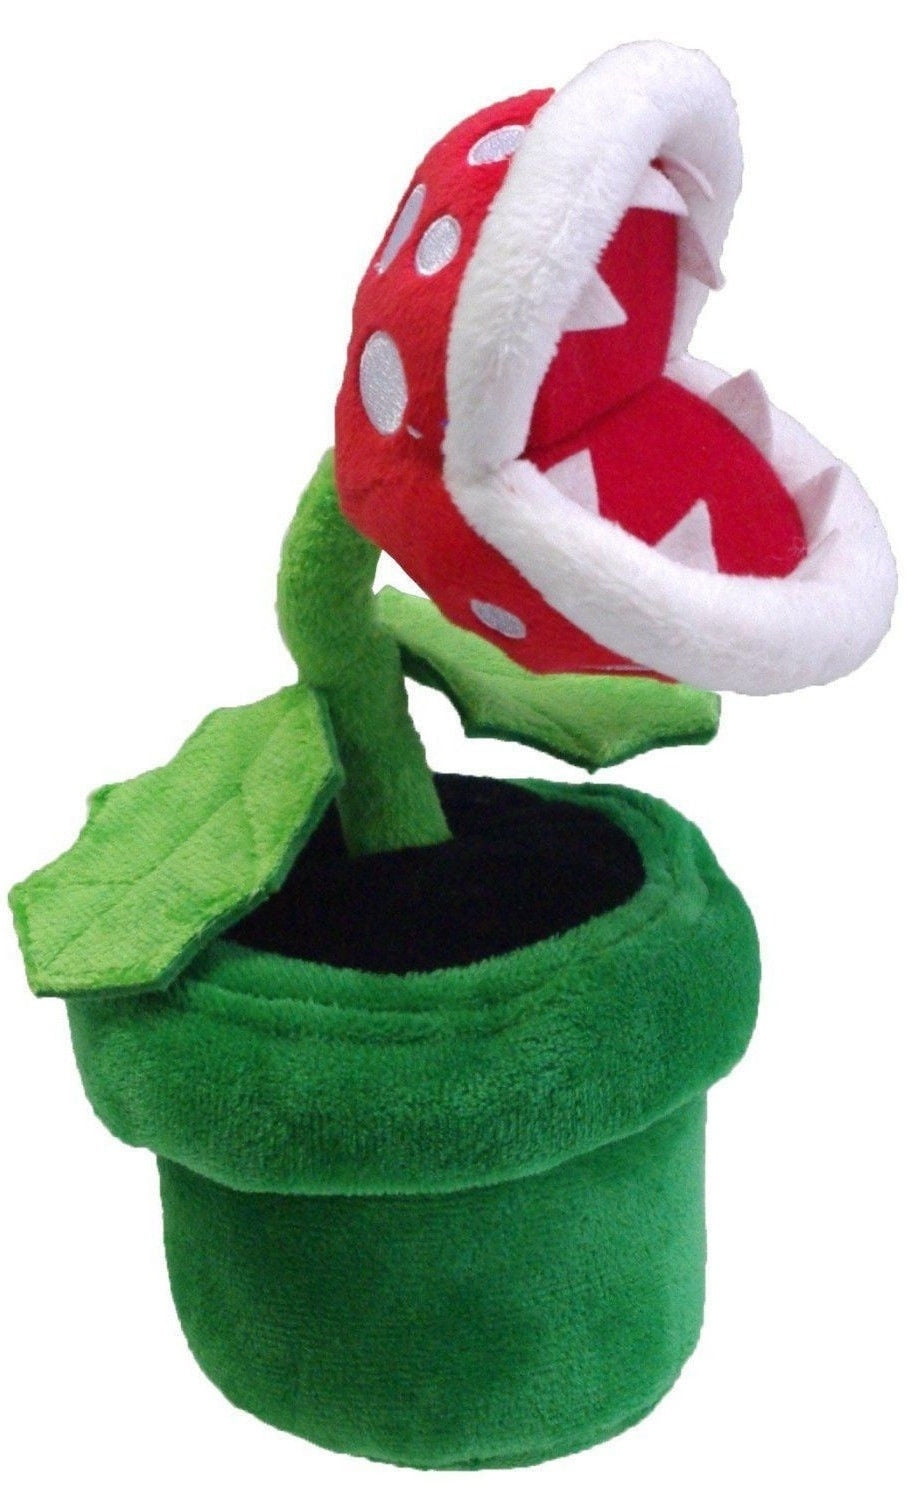 Super Mario Piranha Plant Plush 8in - New Toy Nintendo - Walmart.com